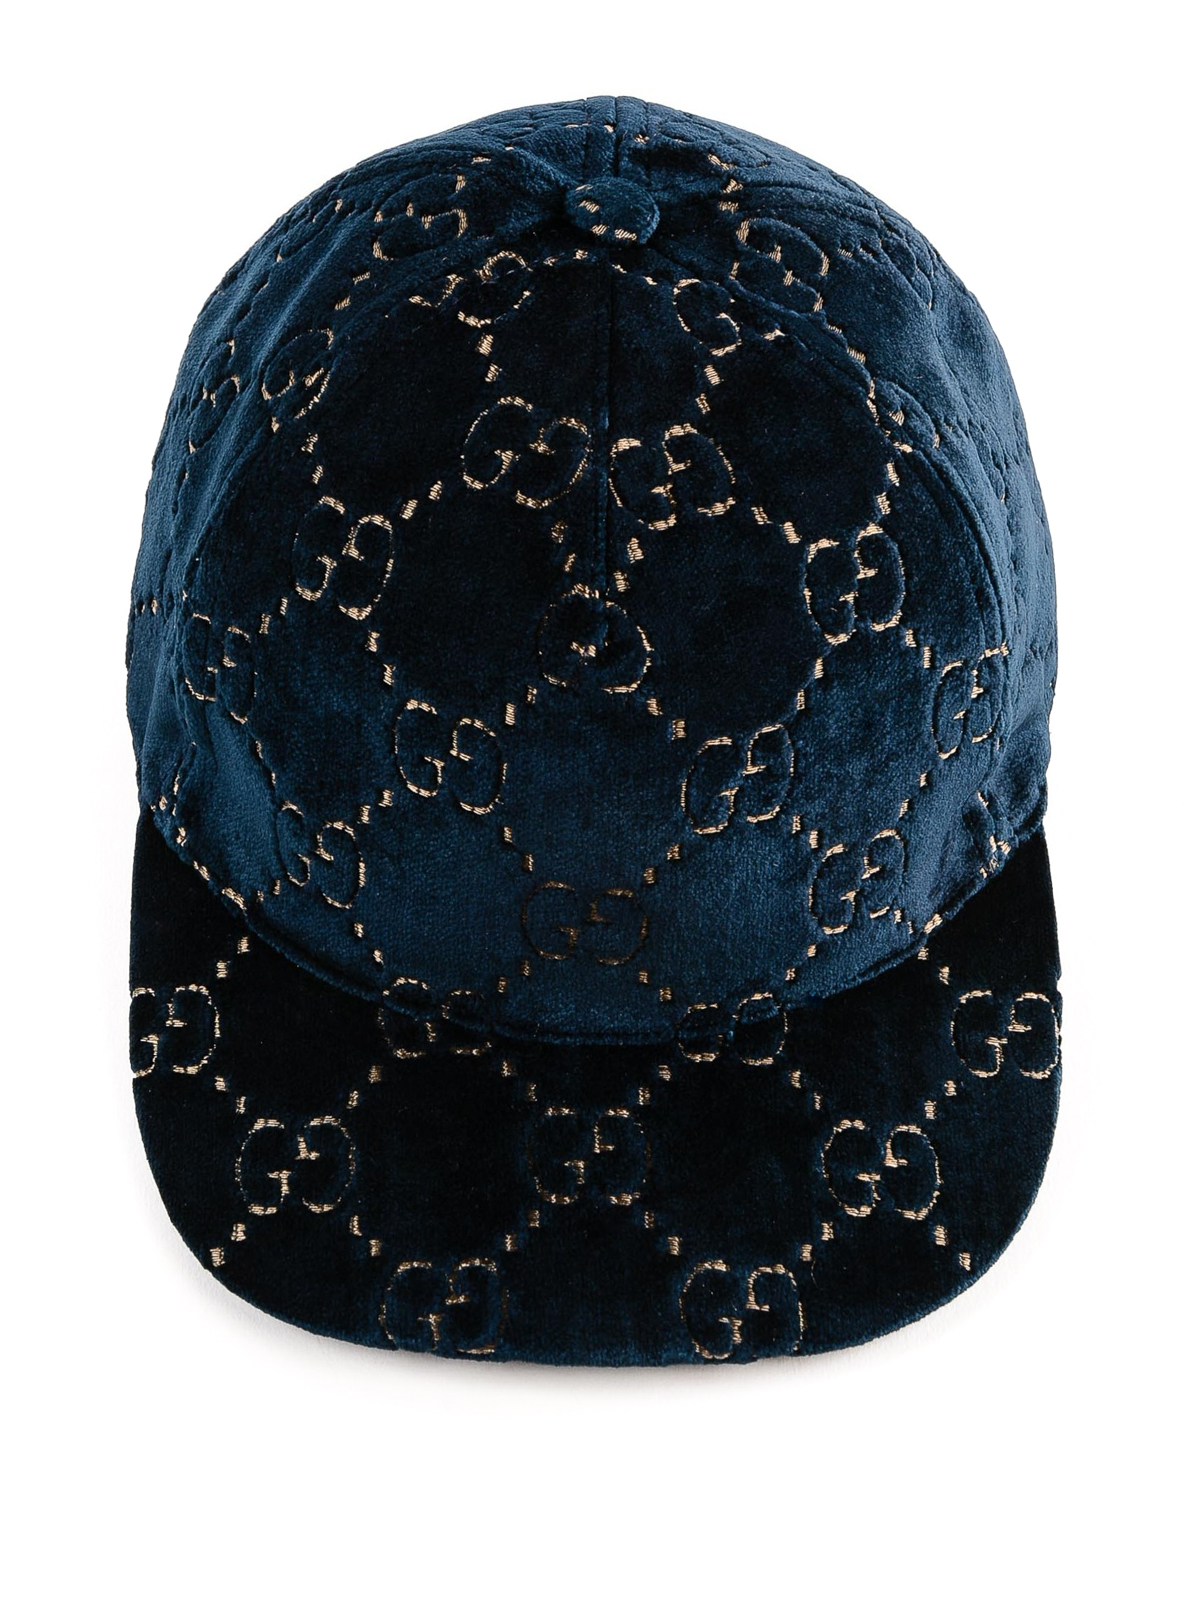 Hats & caps Gucci - GG dark blue velvet baseball cap - 5270753HD874260